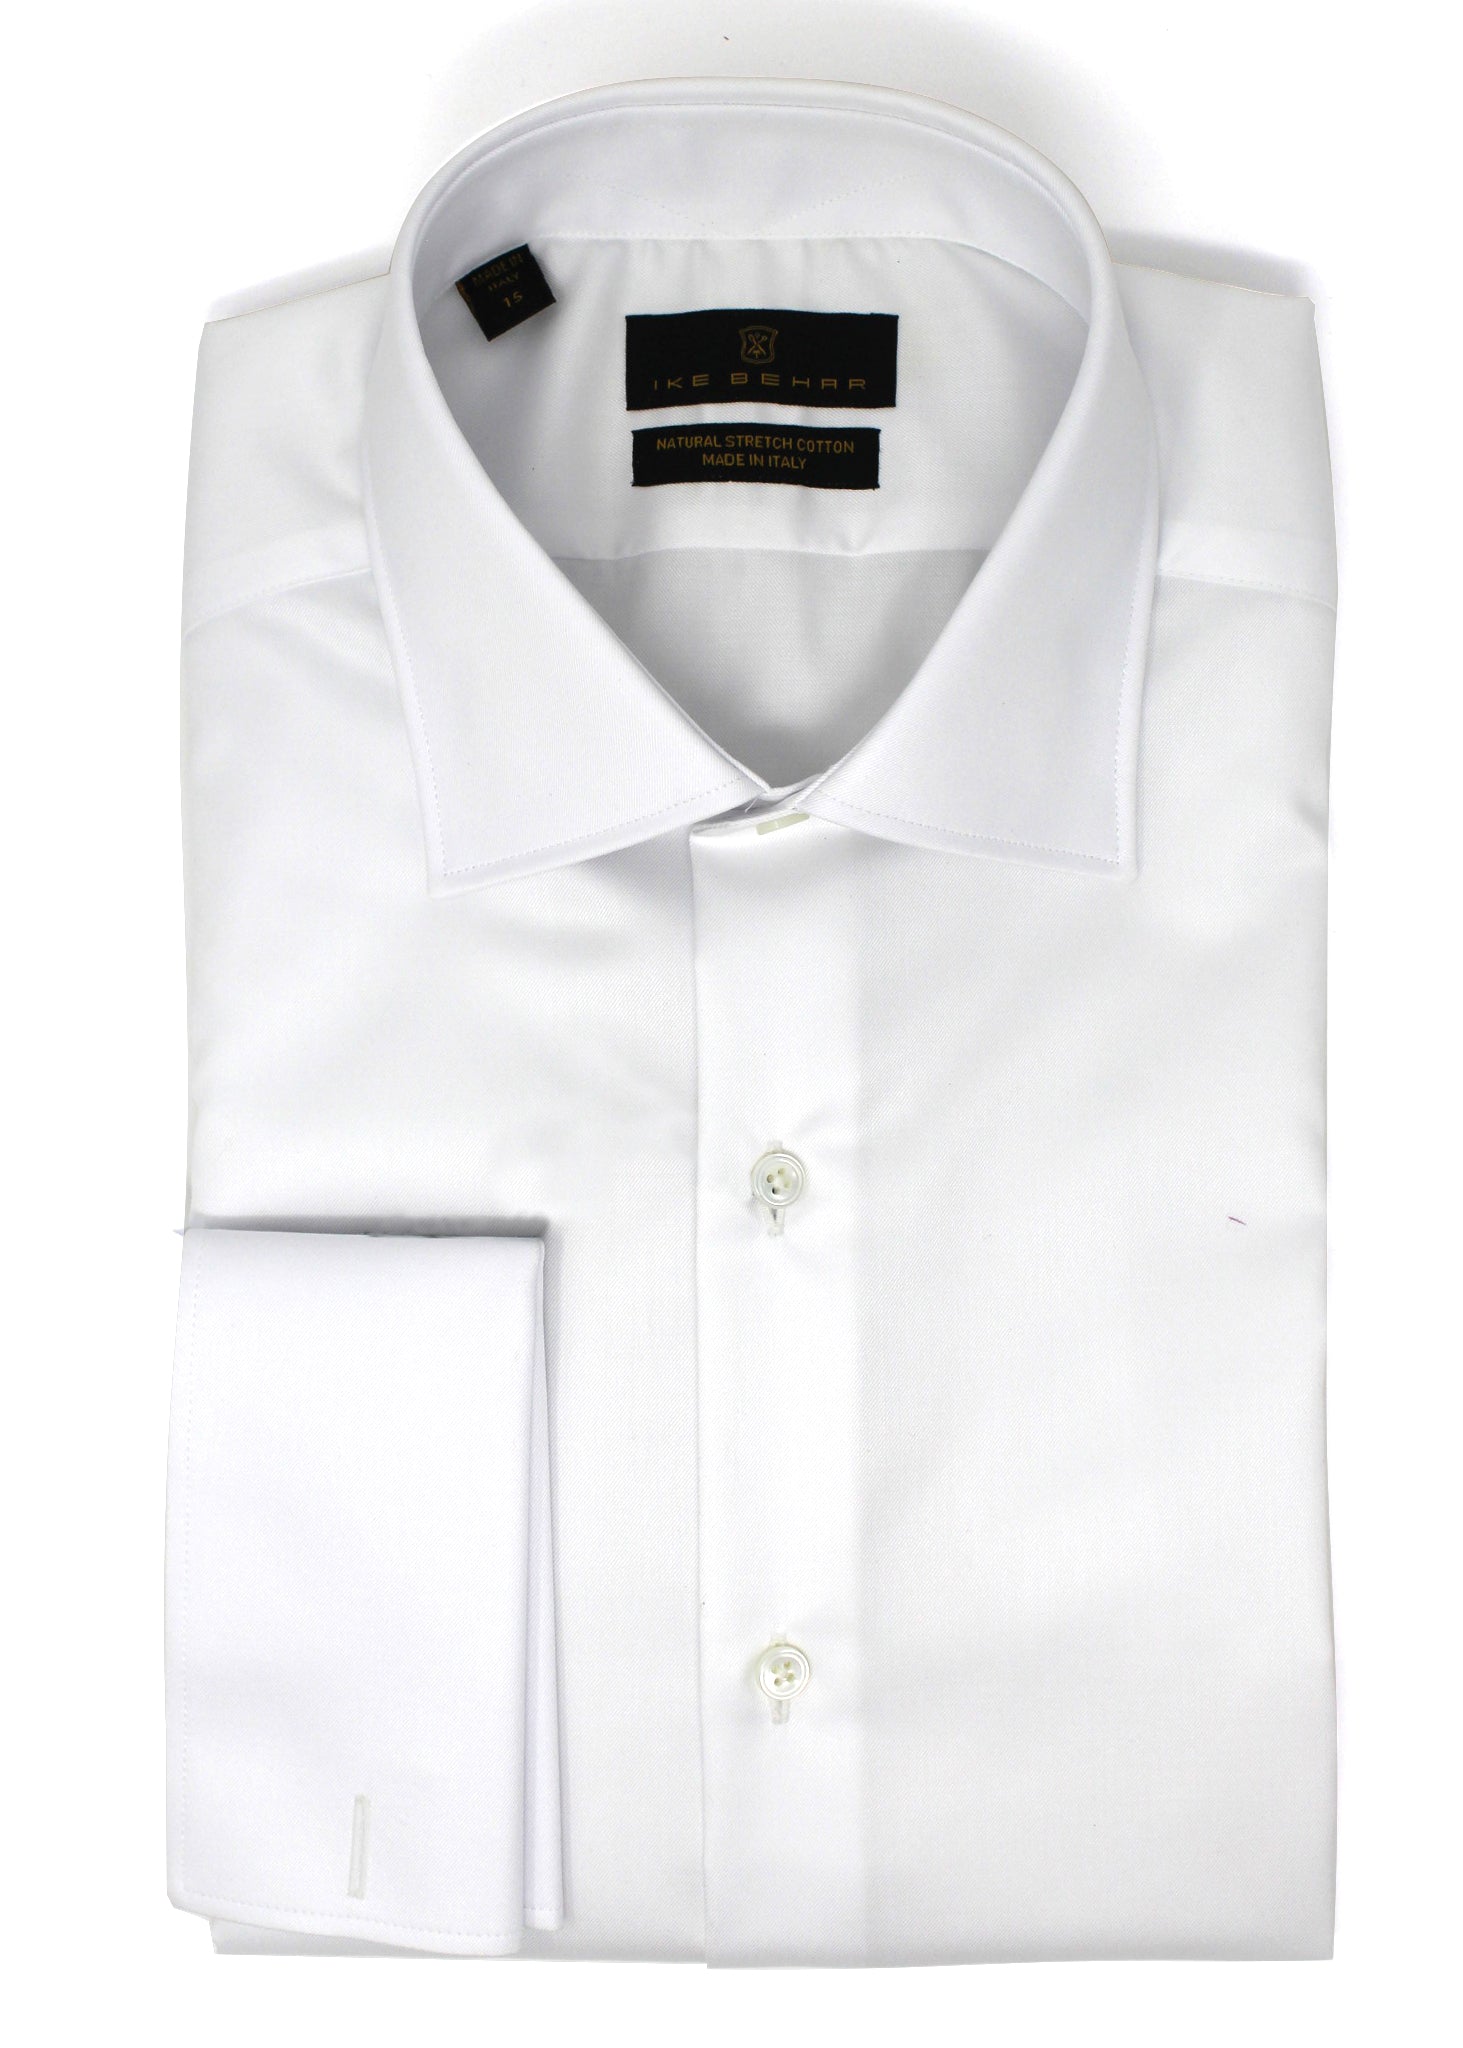 White Twill Natural Stretch Cotton French Cuff Dress Shirt